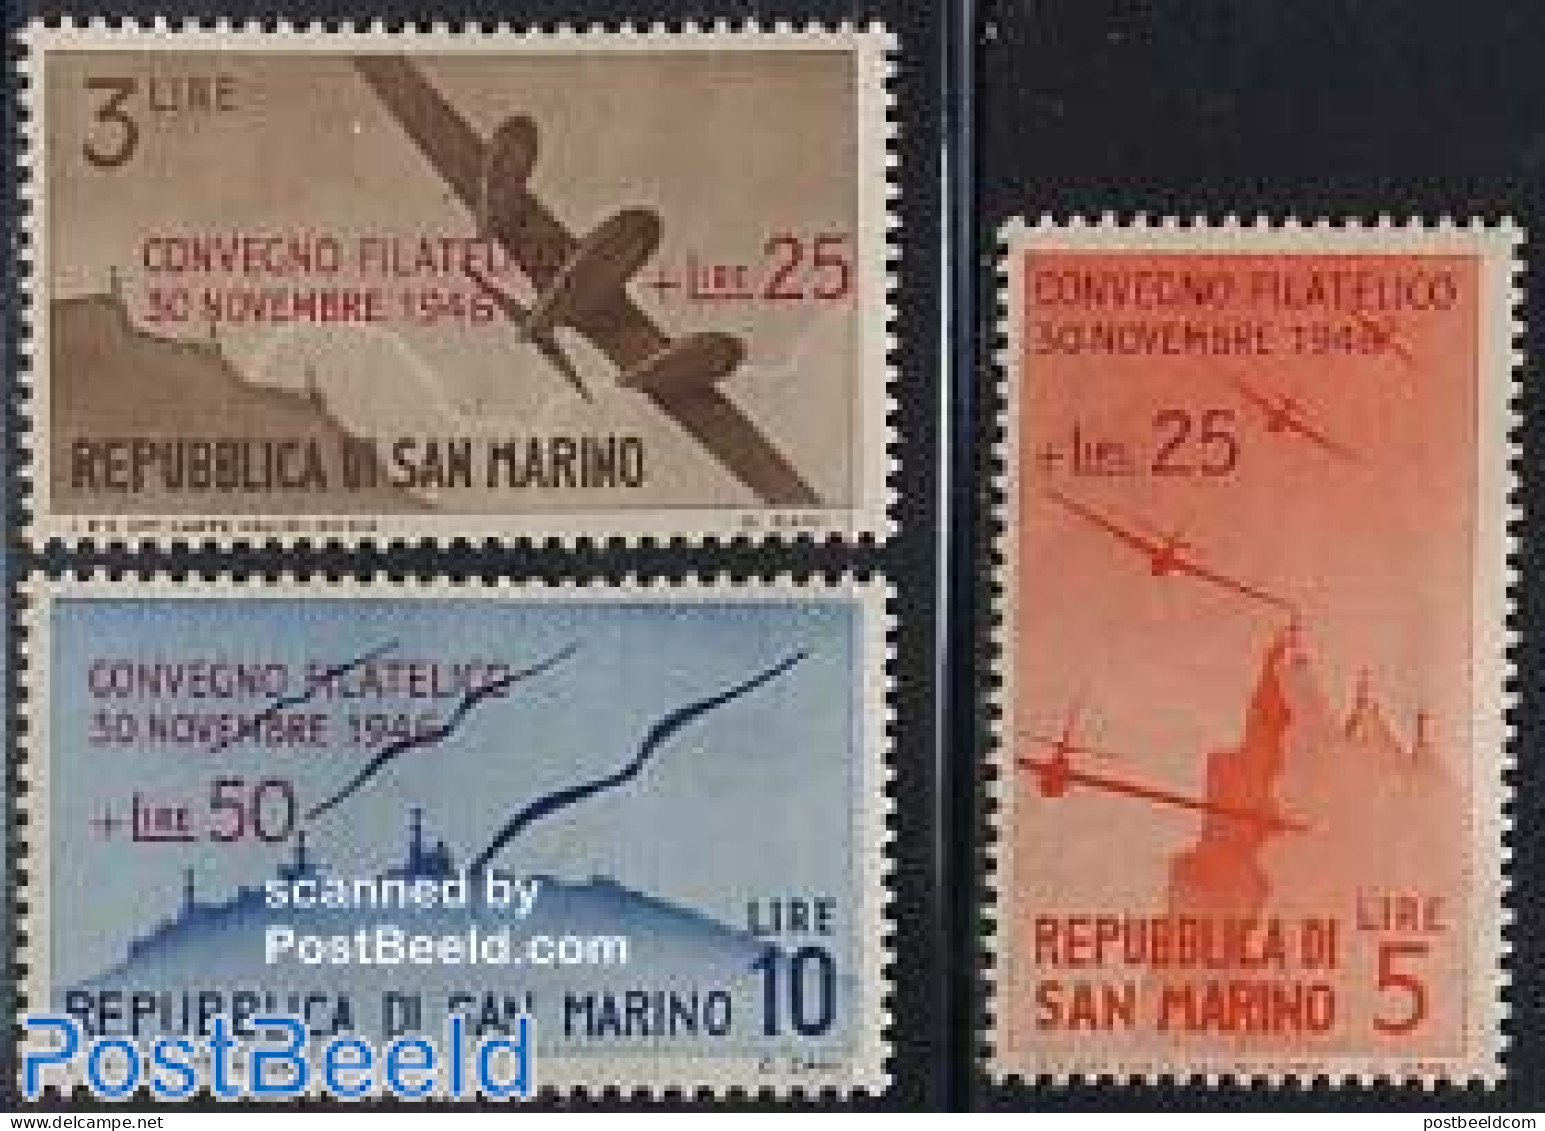 San Marino 1946 Express Mail 3v, Mint NH, Nature - Horses - Ungebraucht